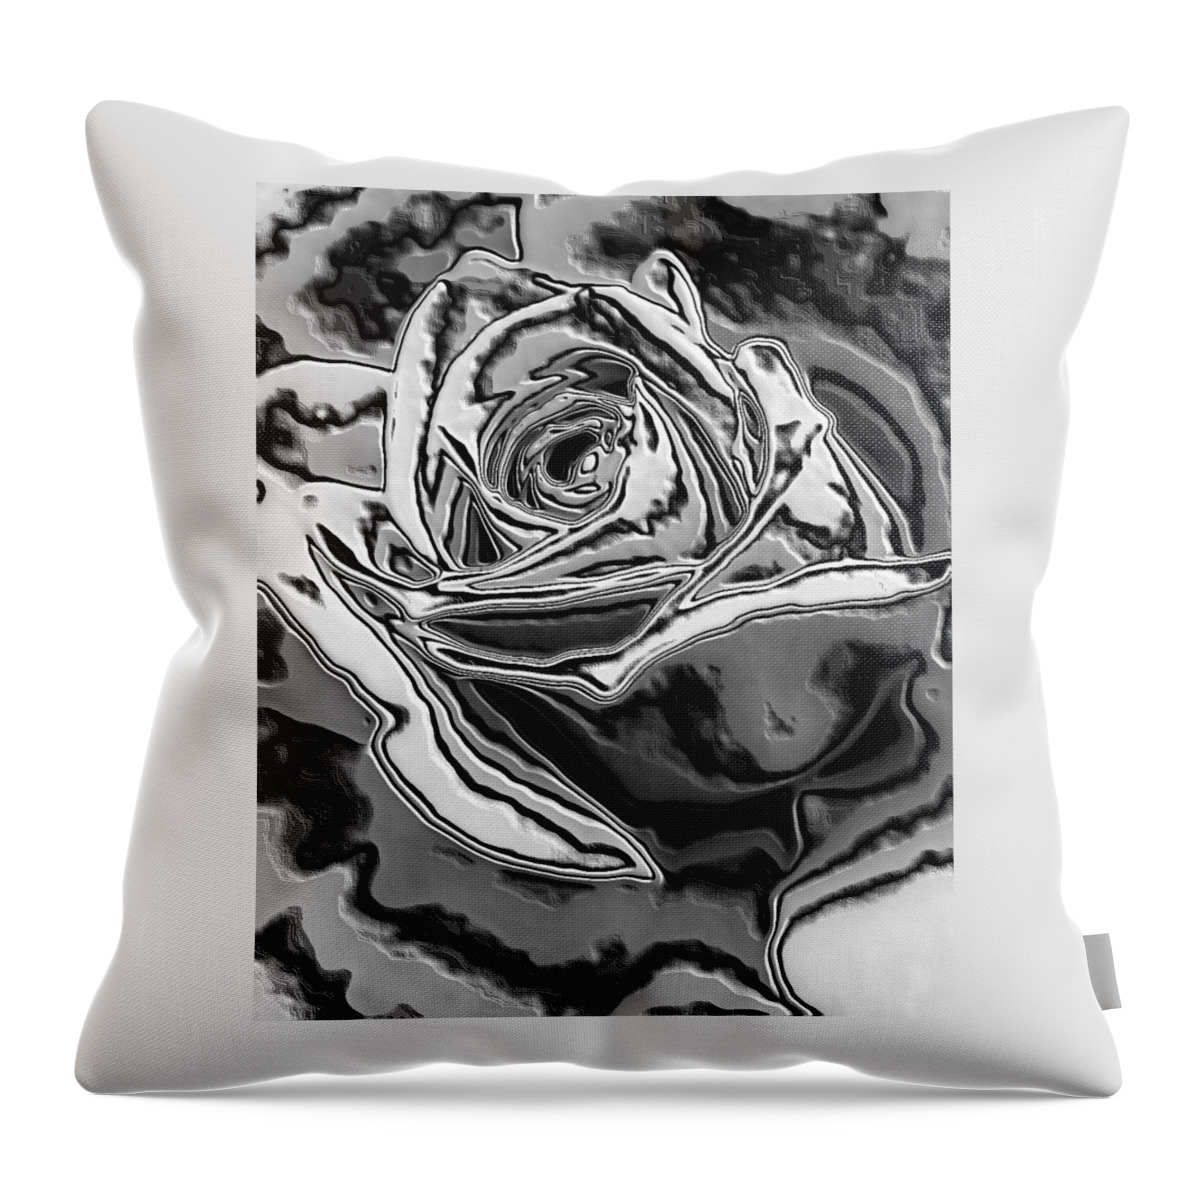 Digital Art Throw Pillow featuring the photograph Liquid Rose by Belinda Cox